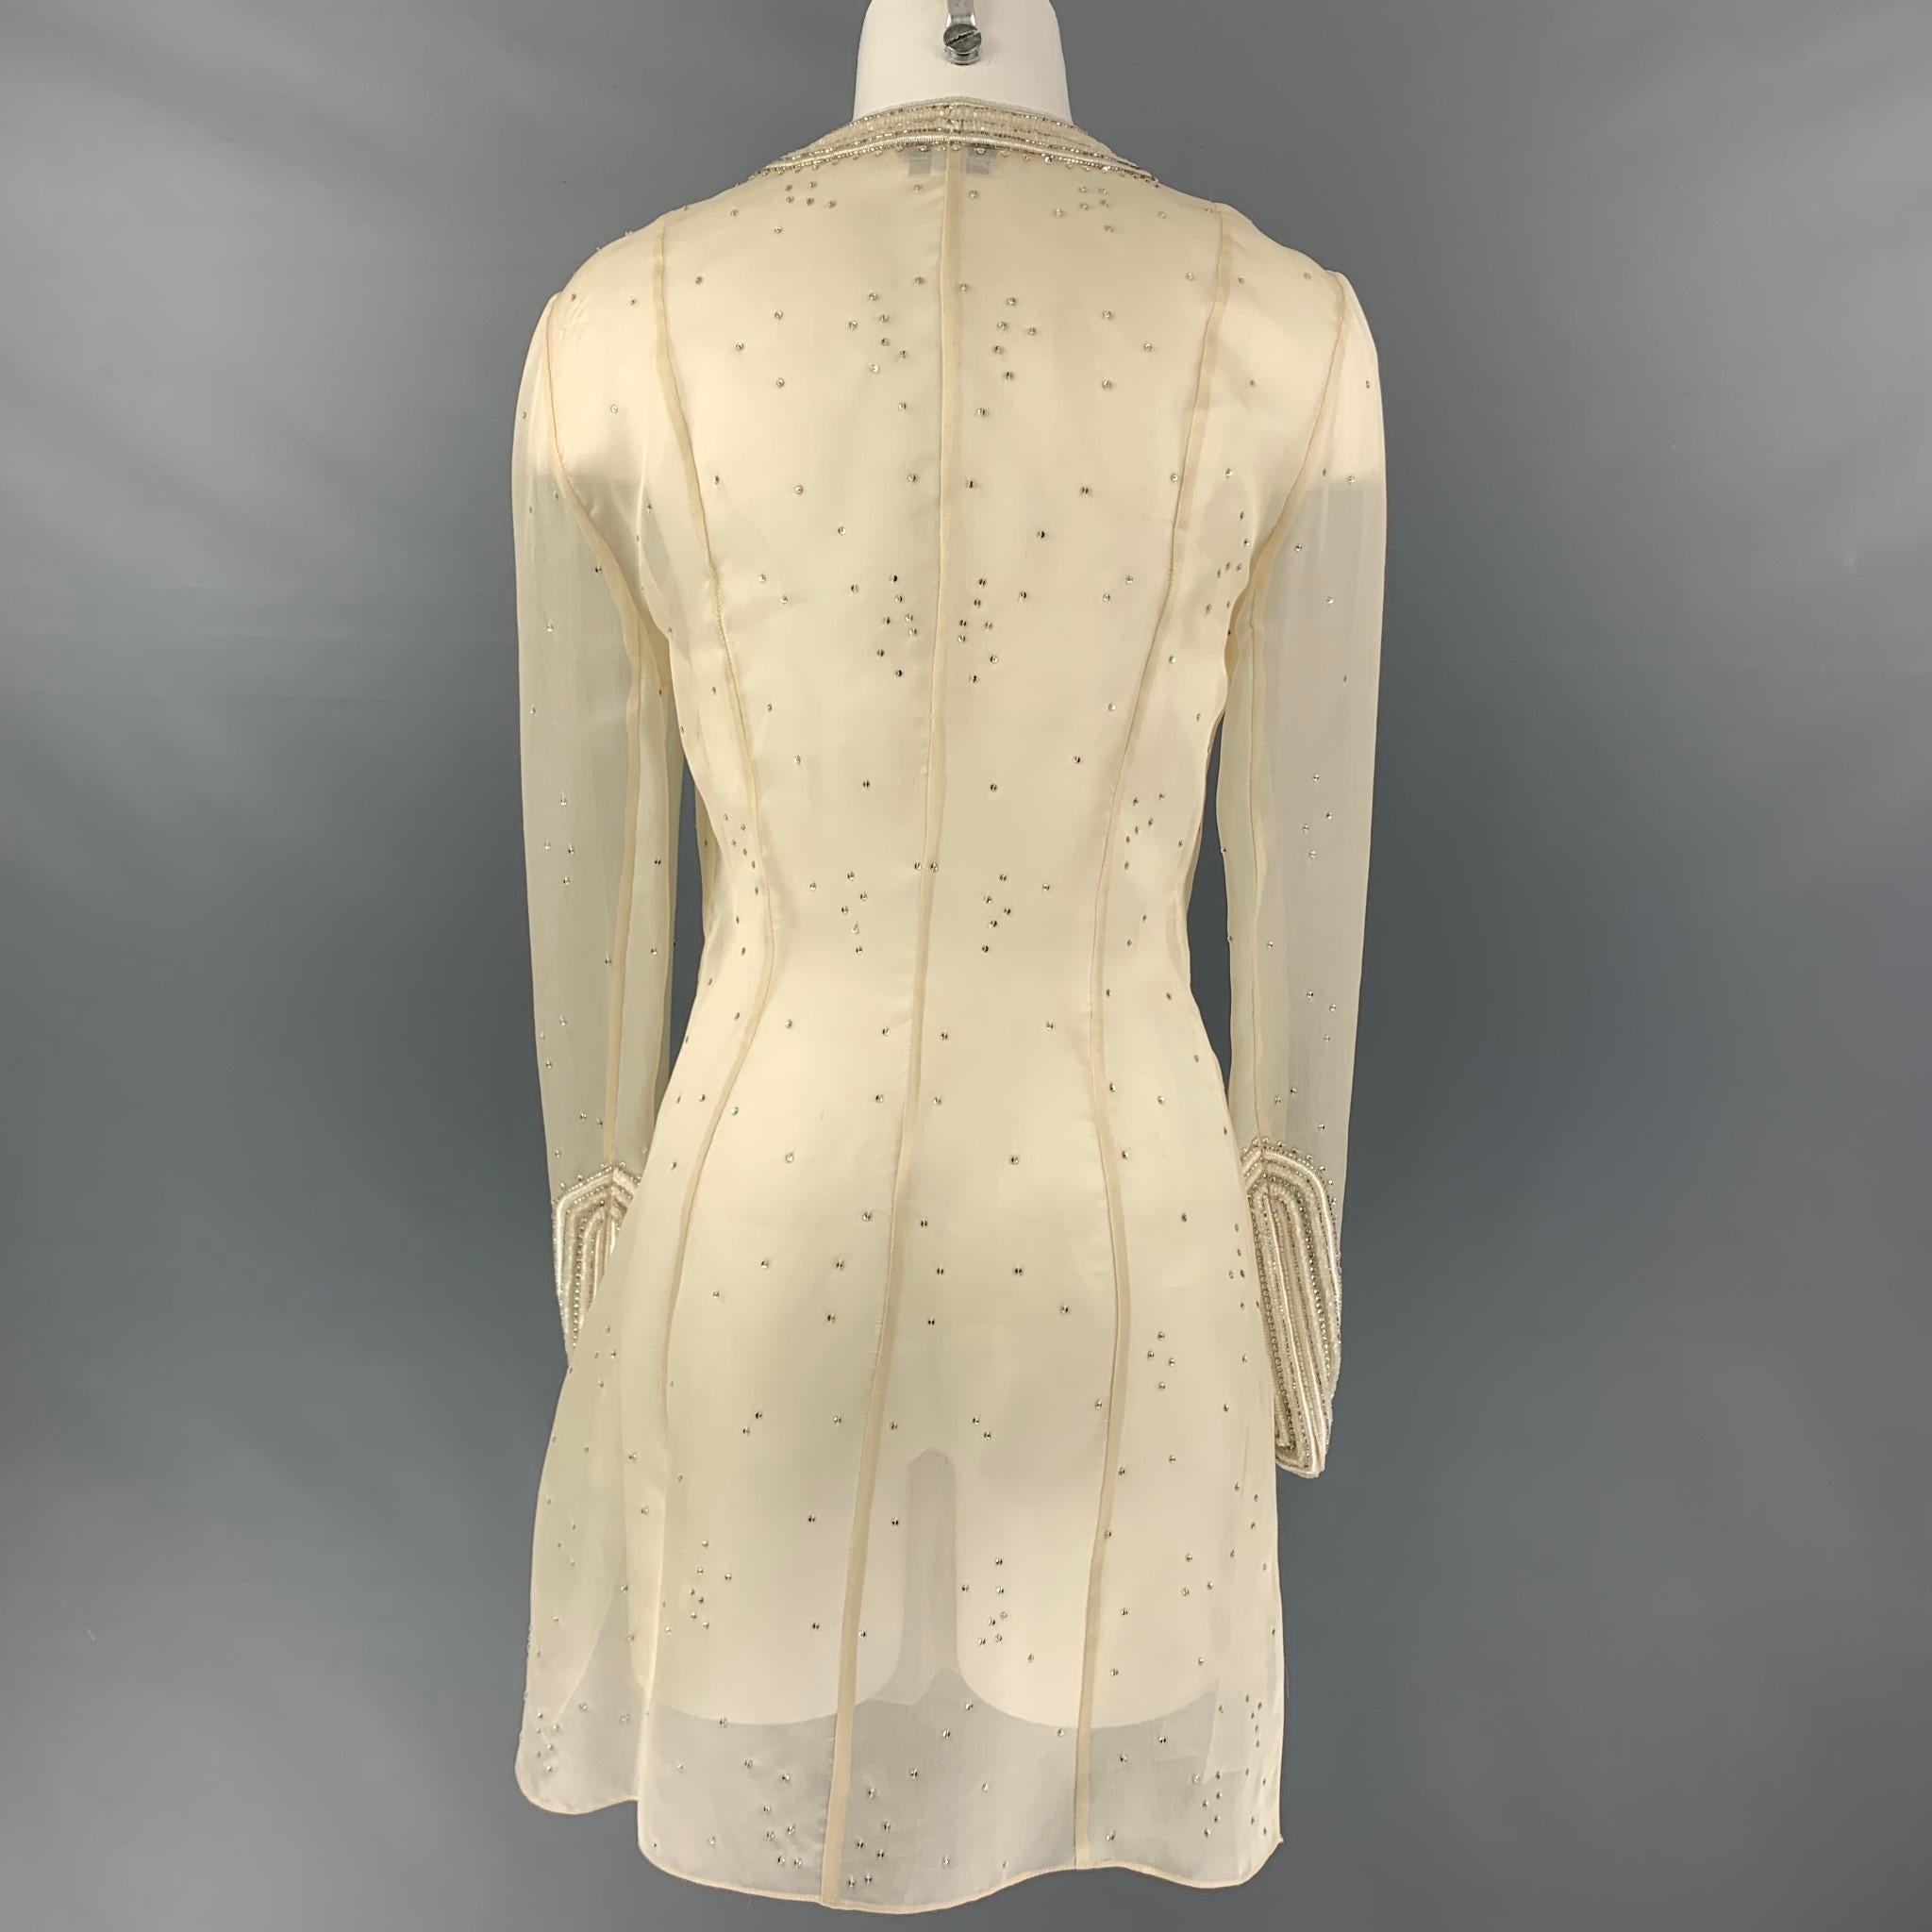 OSCAR DE LA RENTA Size M Cream Embroidered Tunic Dress Top 1